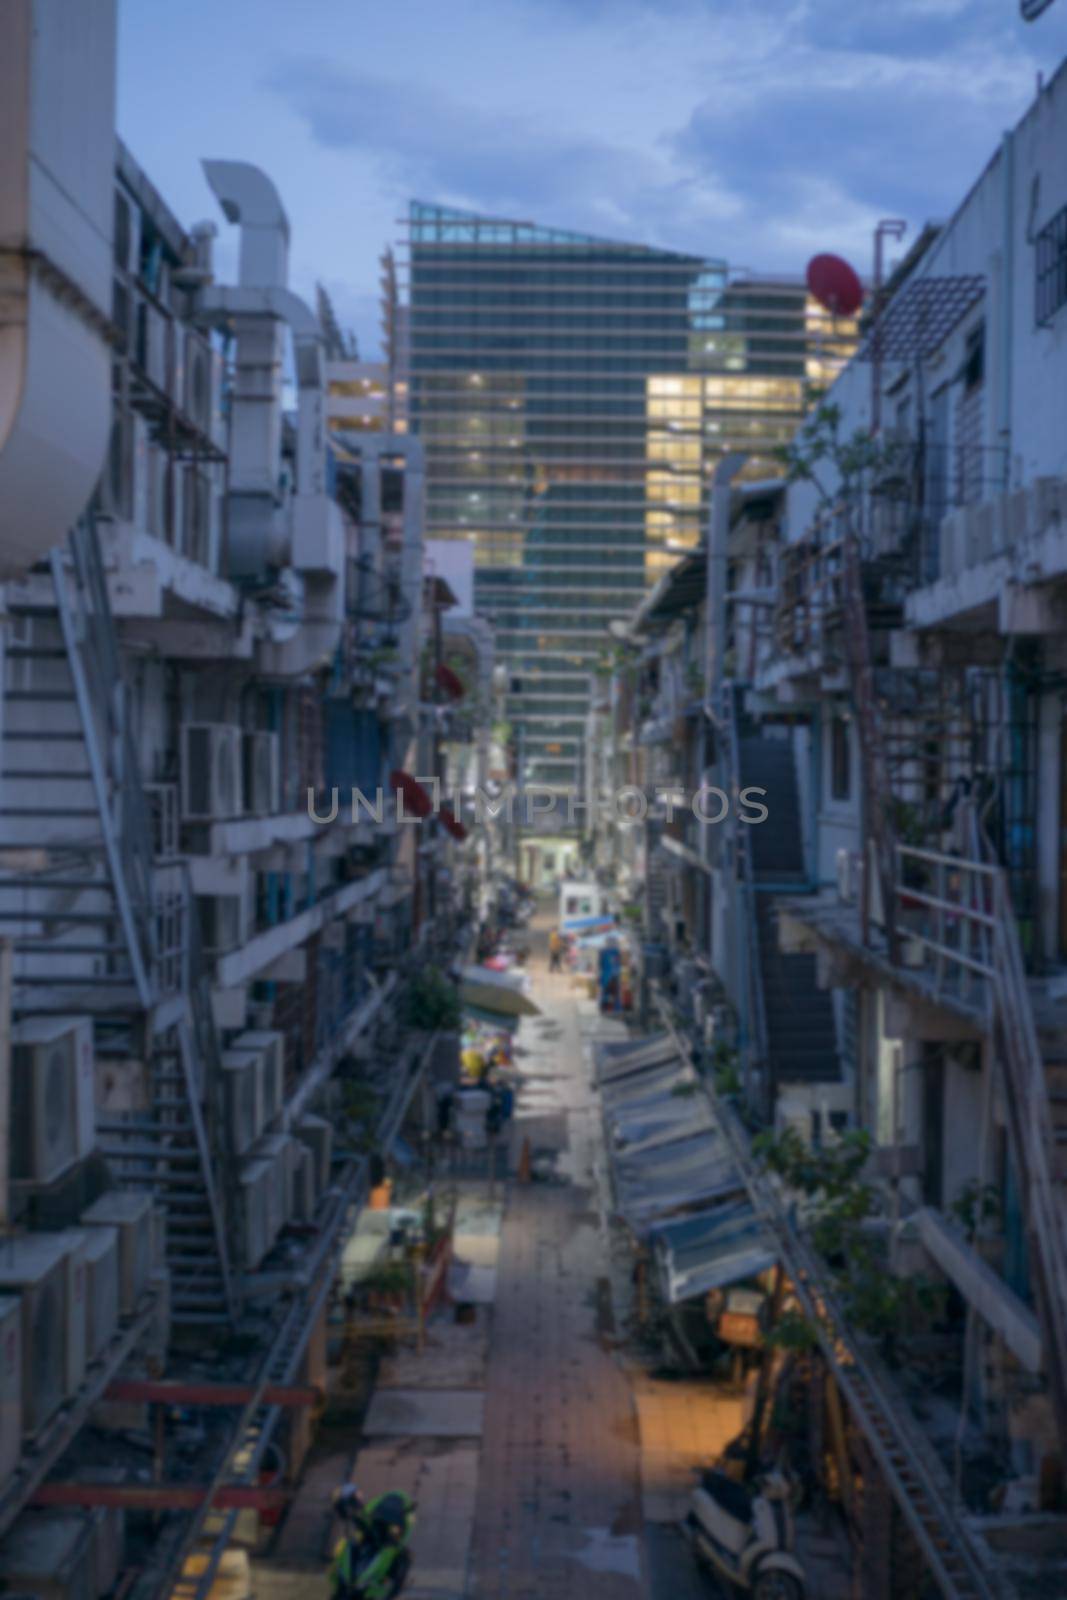 Blurred Dark Urban Alley at Night. by sirawit99